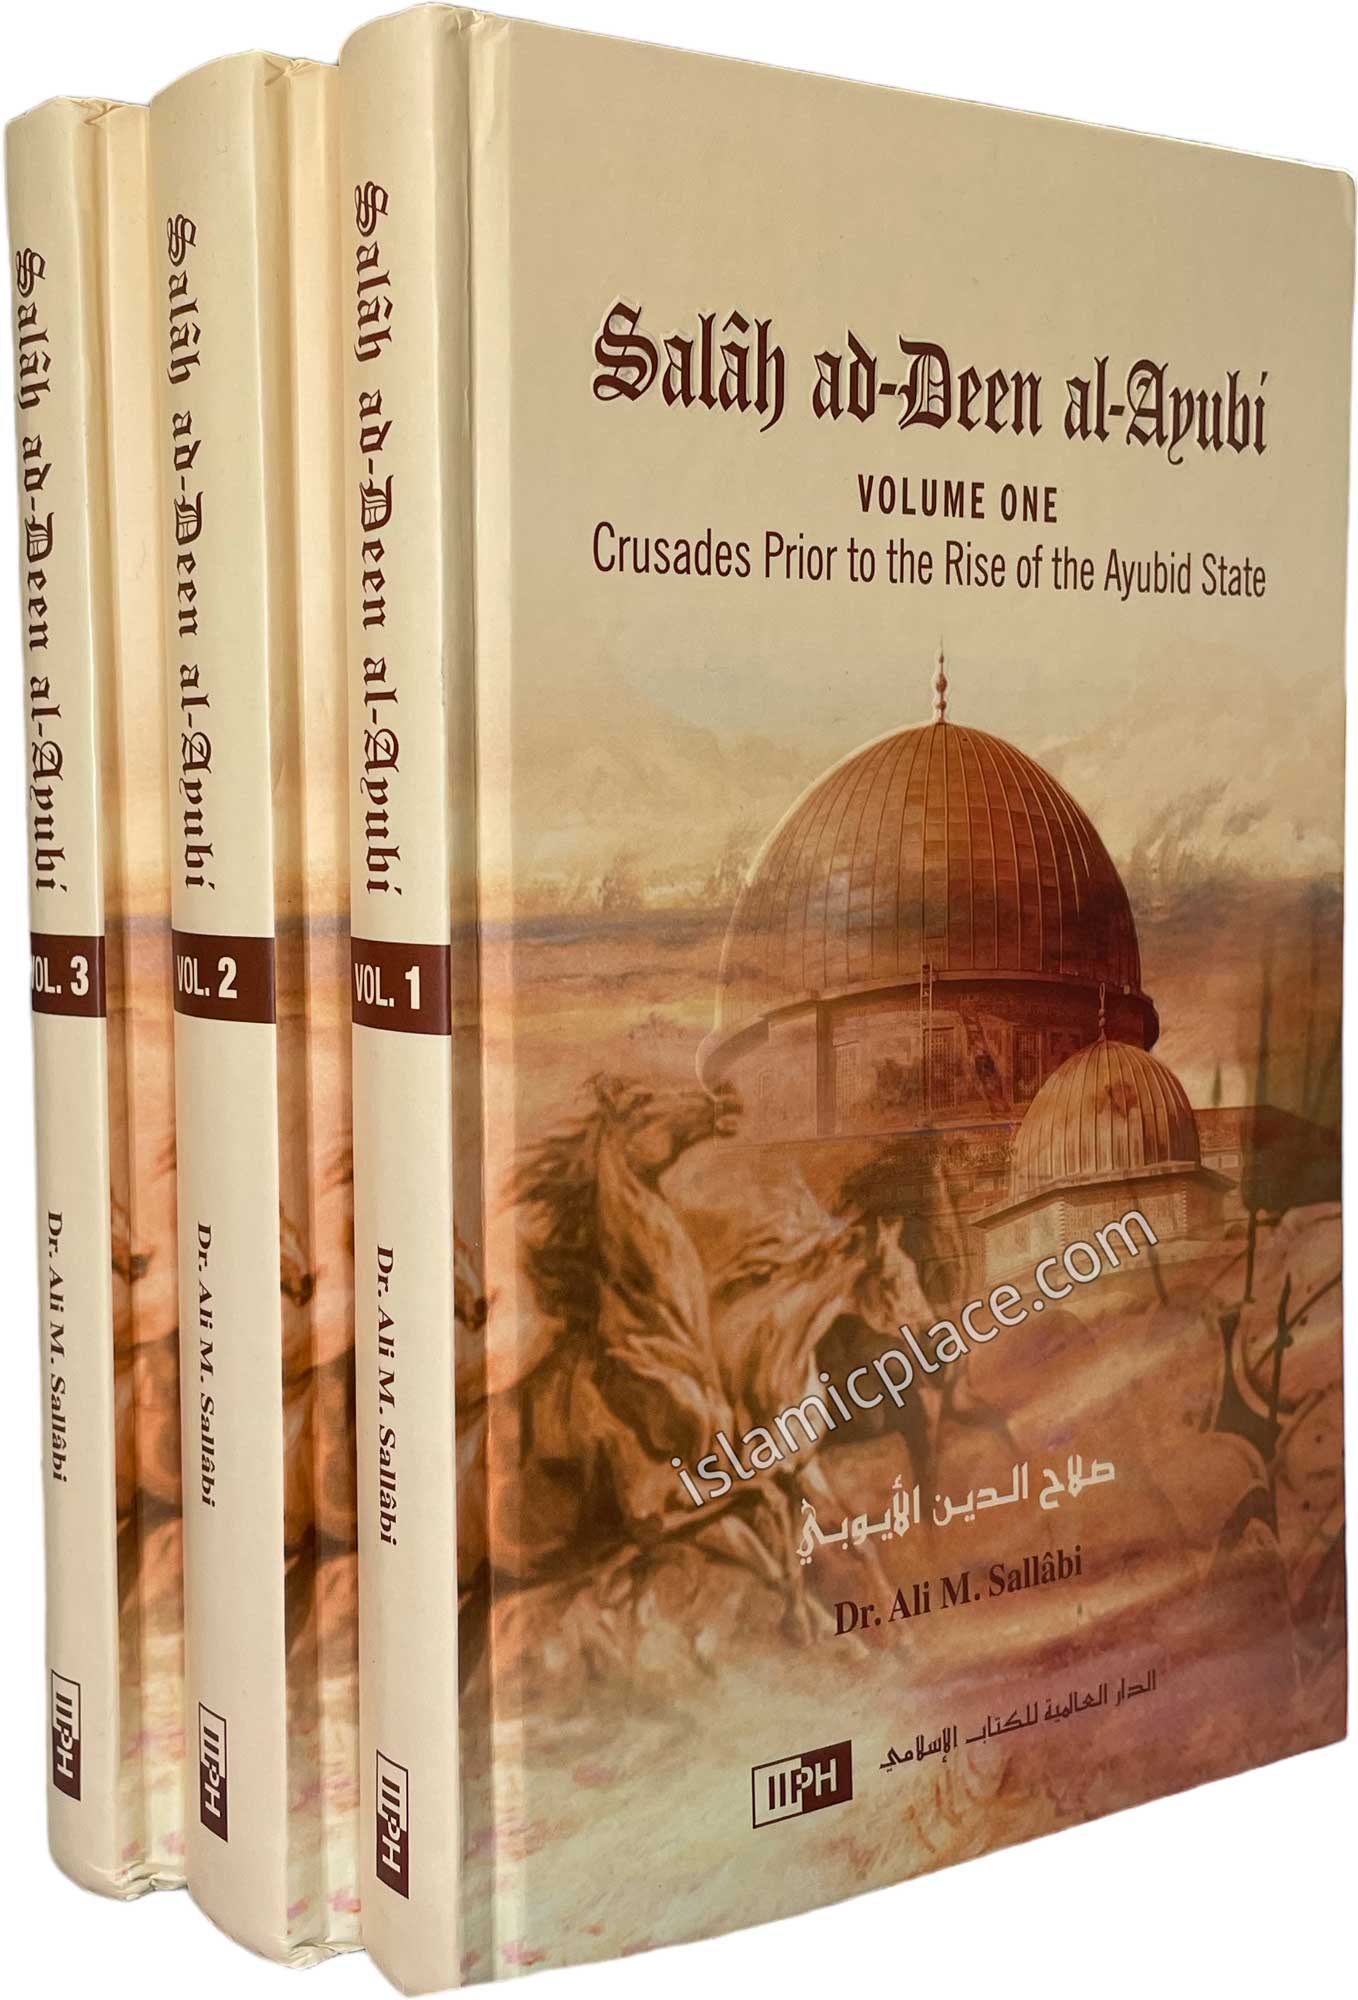 [3 vol set] Salah ad-Deen al-Ayubi: Crusades prior to the Rise of the Ayubid State